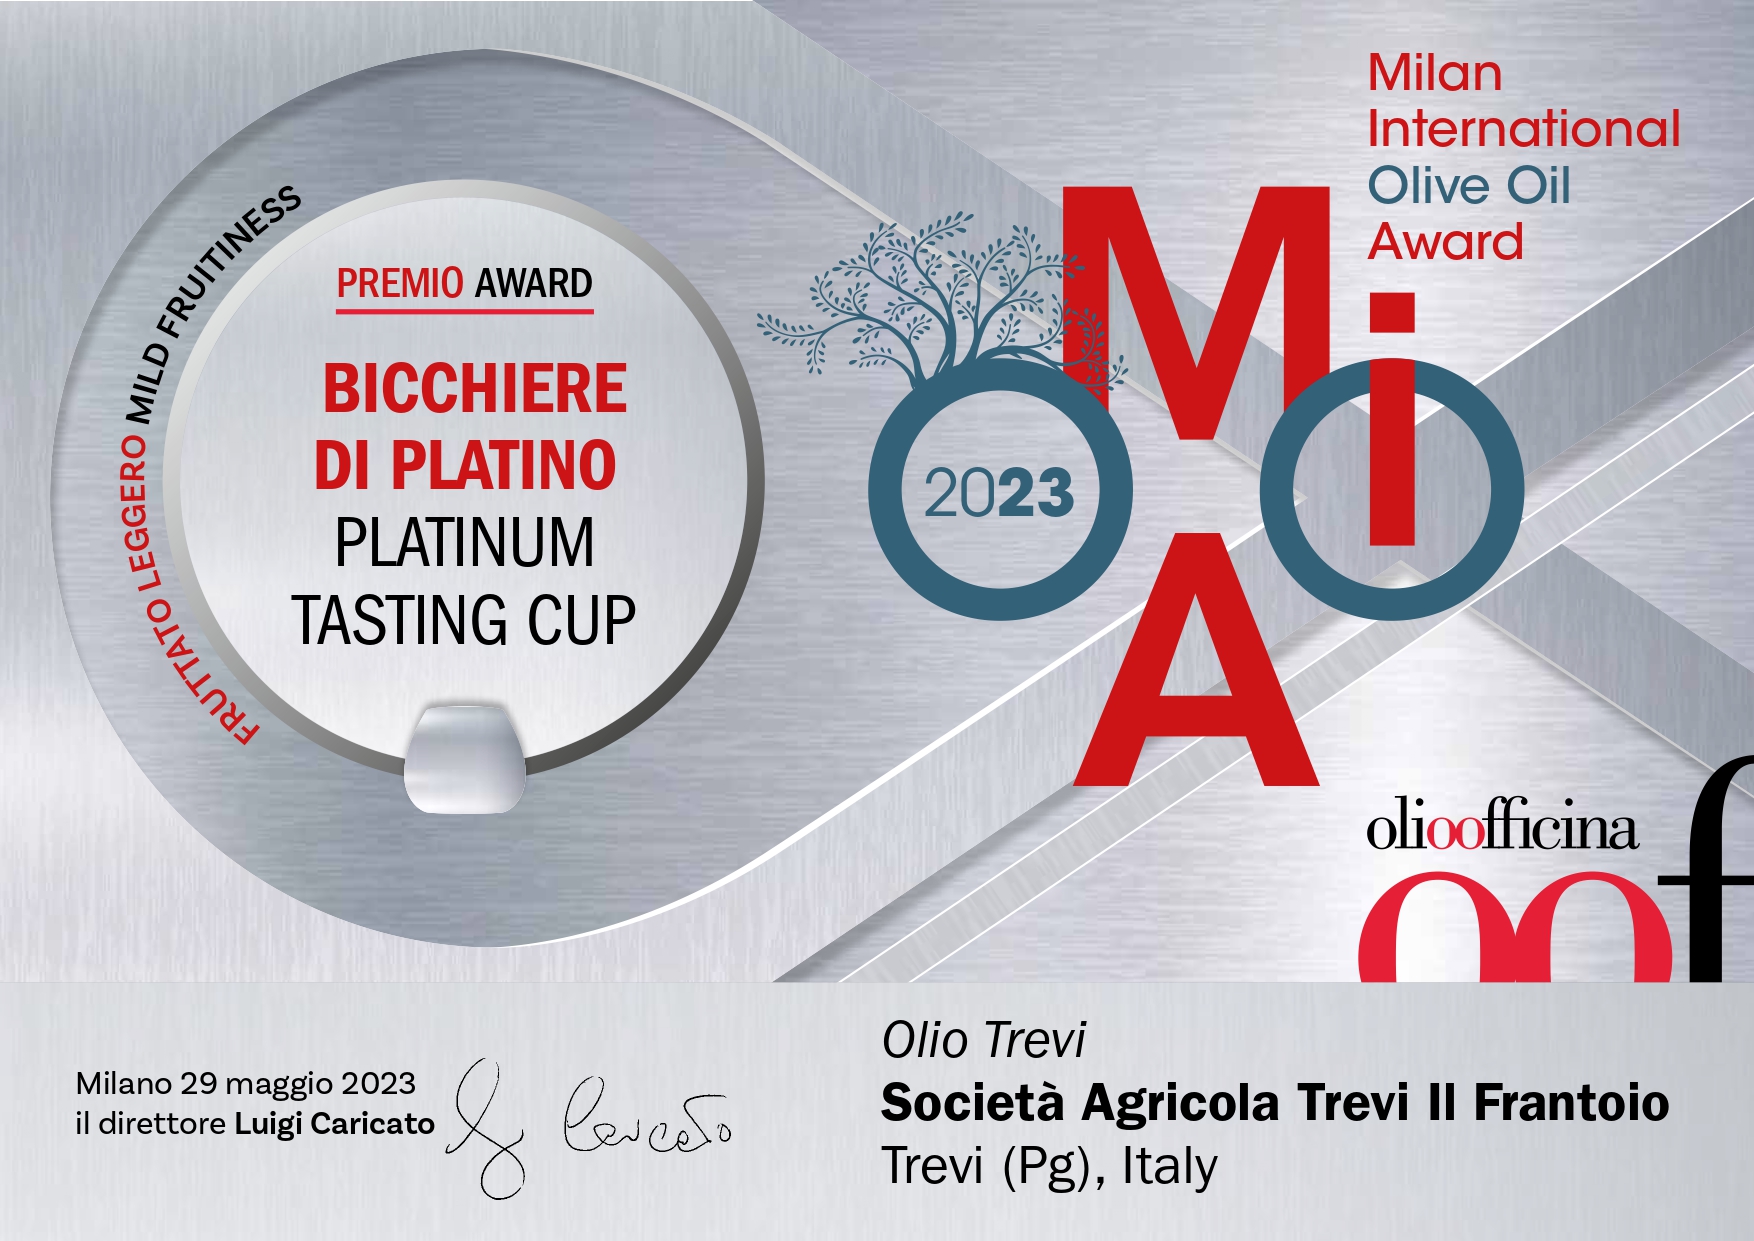 Milan International Olive Oil Award 2023 – BICCHIERE DI PLATINO PLATINUM TASTING CUP 2023